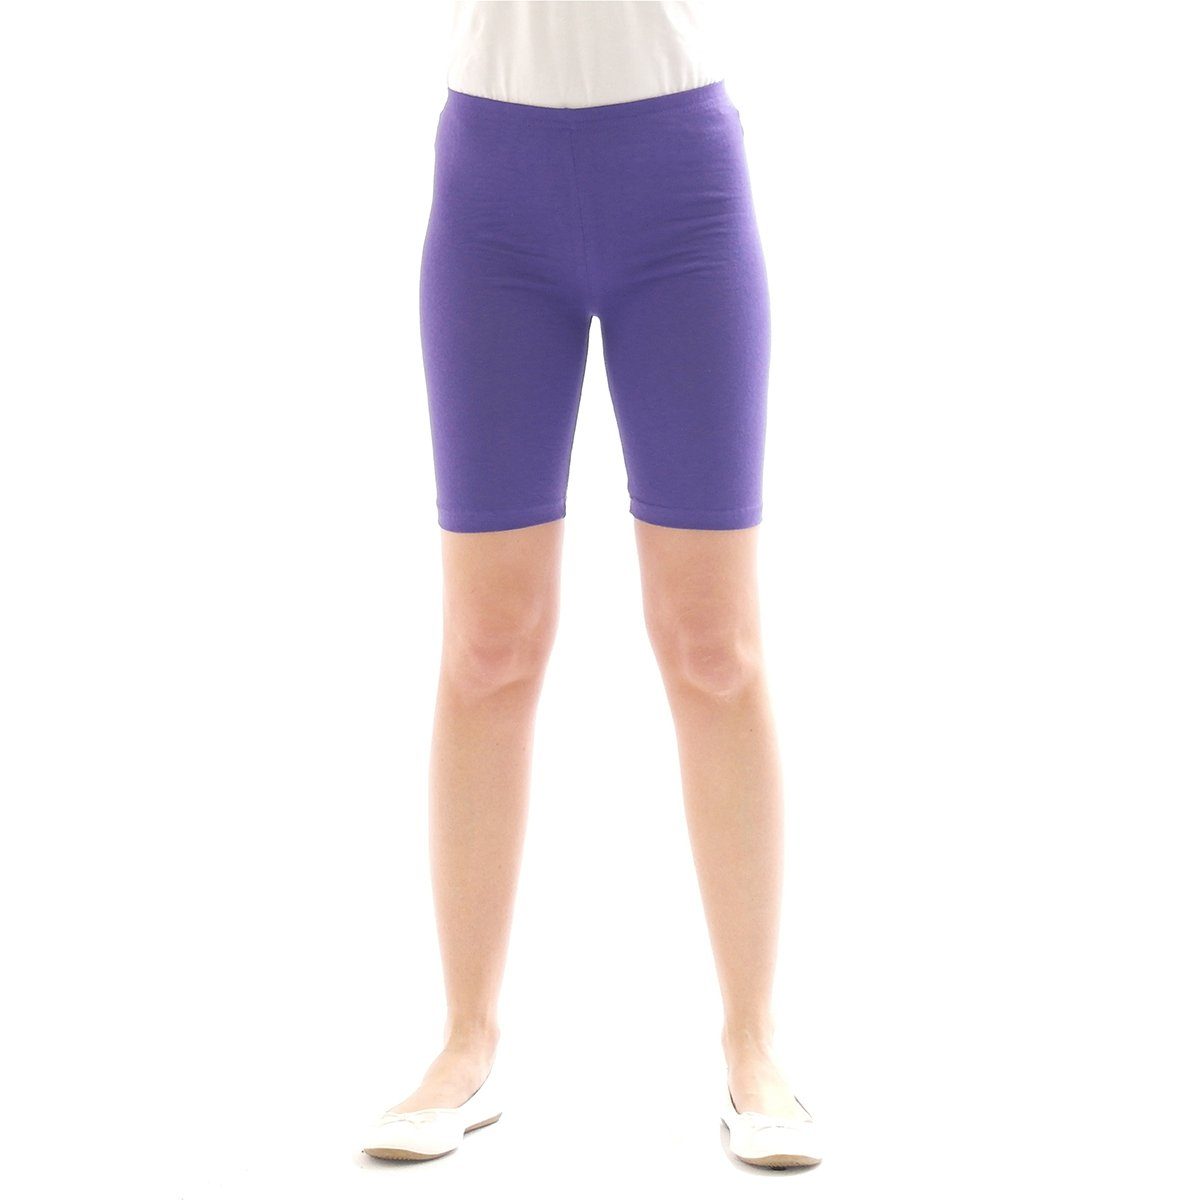 SYS Shorts Kinder Shorts Sport Mädchen Pants 1/2 Jungen violett Baumwolle